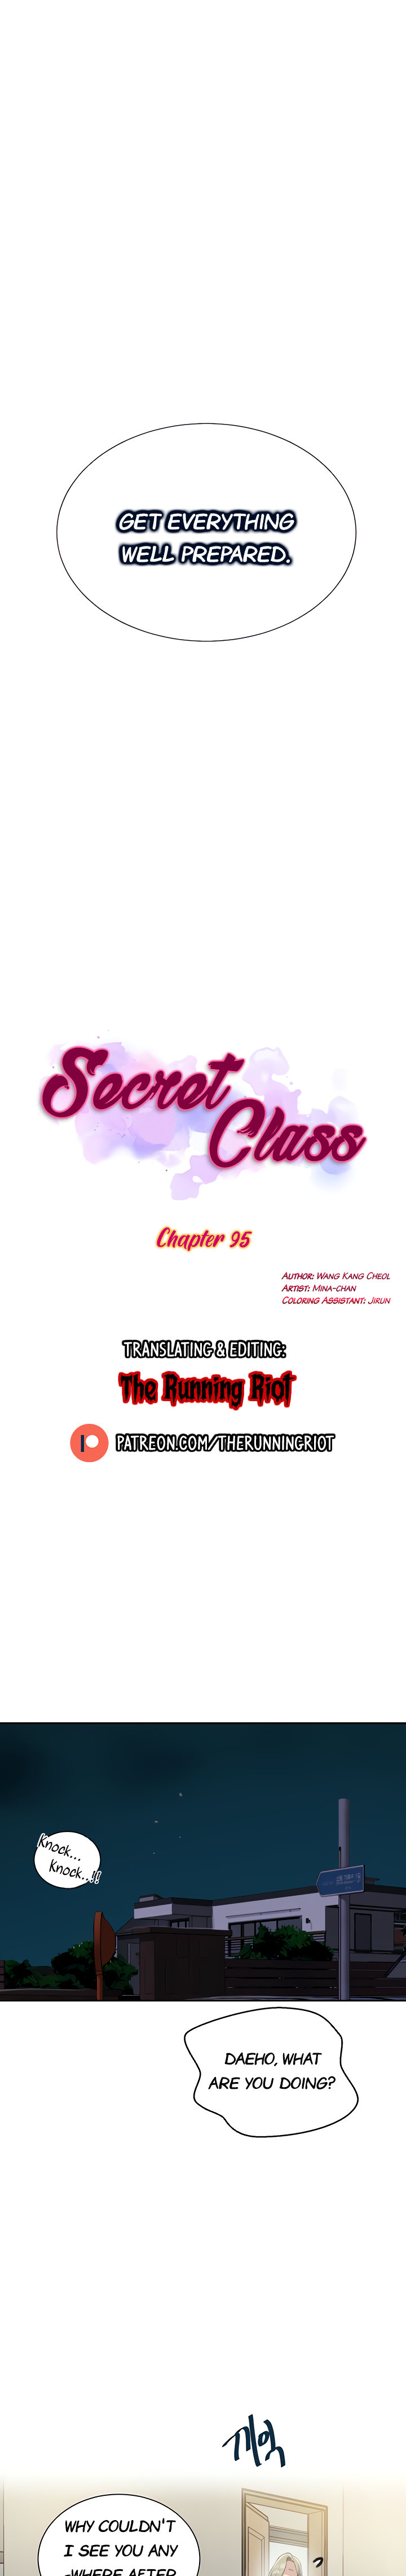 Chapter 95, read Chapter 95 onllne,Chapter 95 manga, Chapter 95 raw manga, Chapter 95 online, Chapter 95 japscan, Chapter 95 online, chapter-95, Read SECRET CLASS MANGA, x manga origines